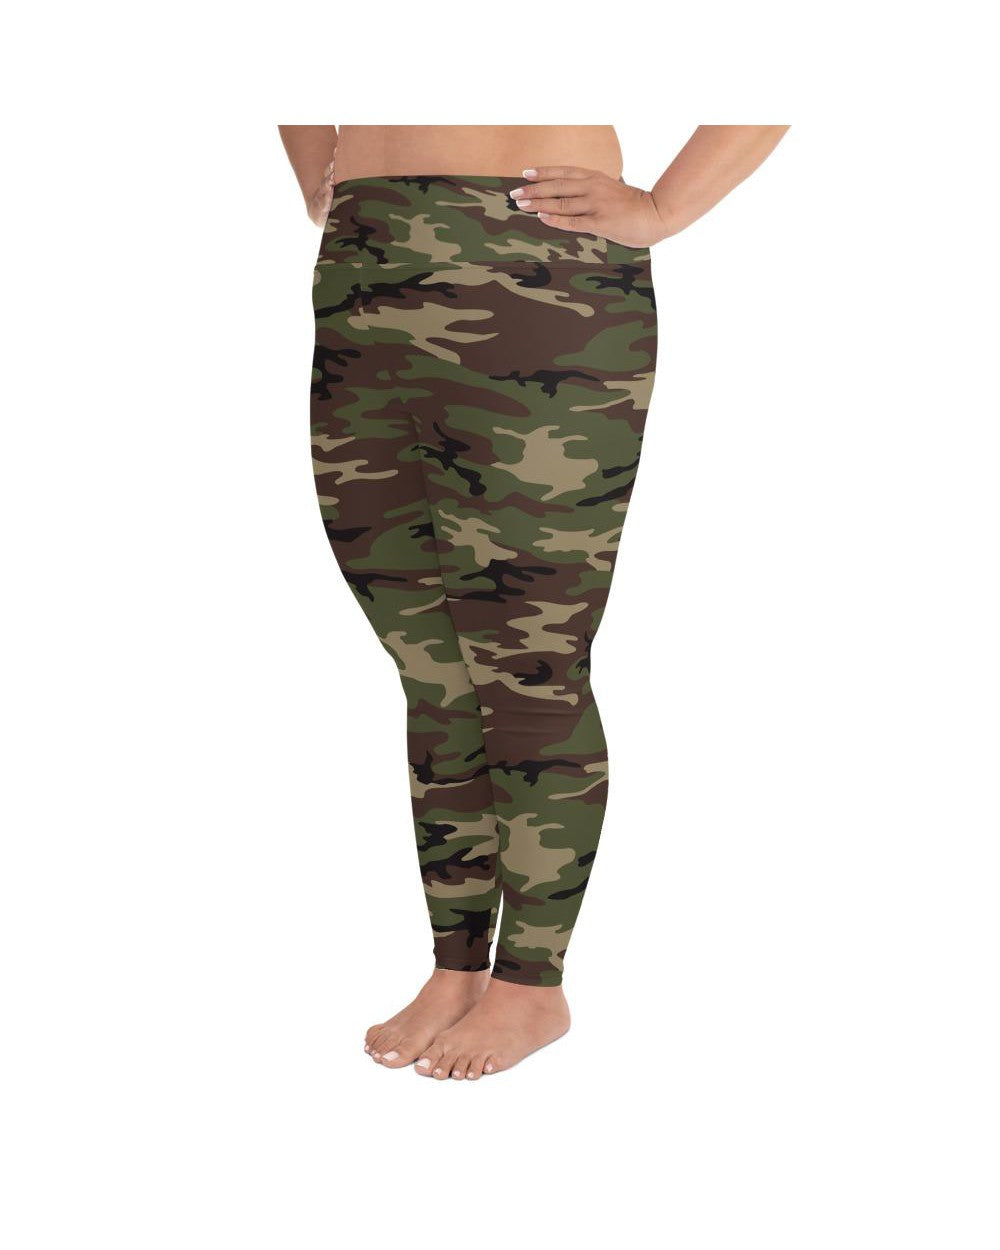 Green Camo Leggings, Camouflage Leggings, Military Leggings, Army